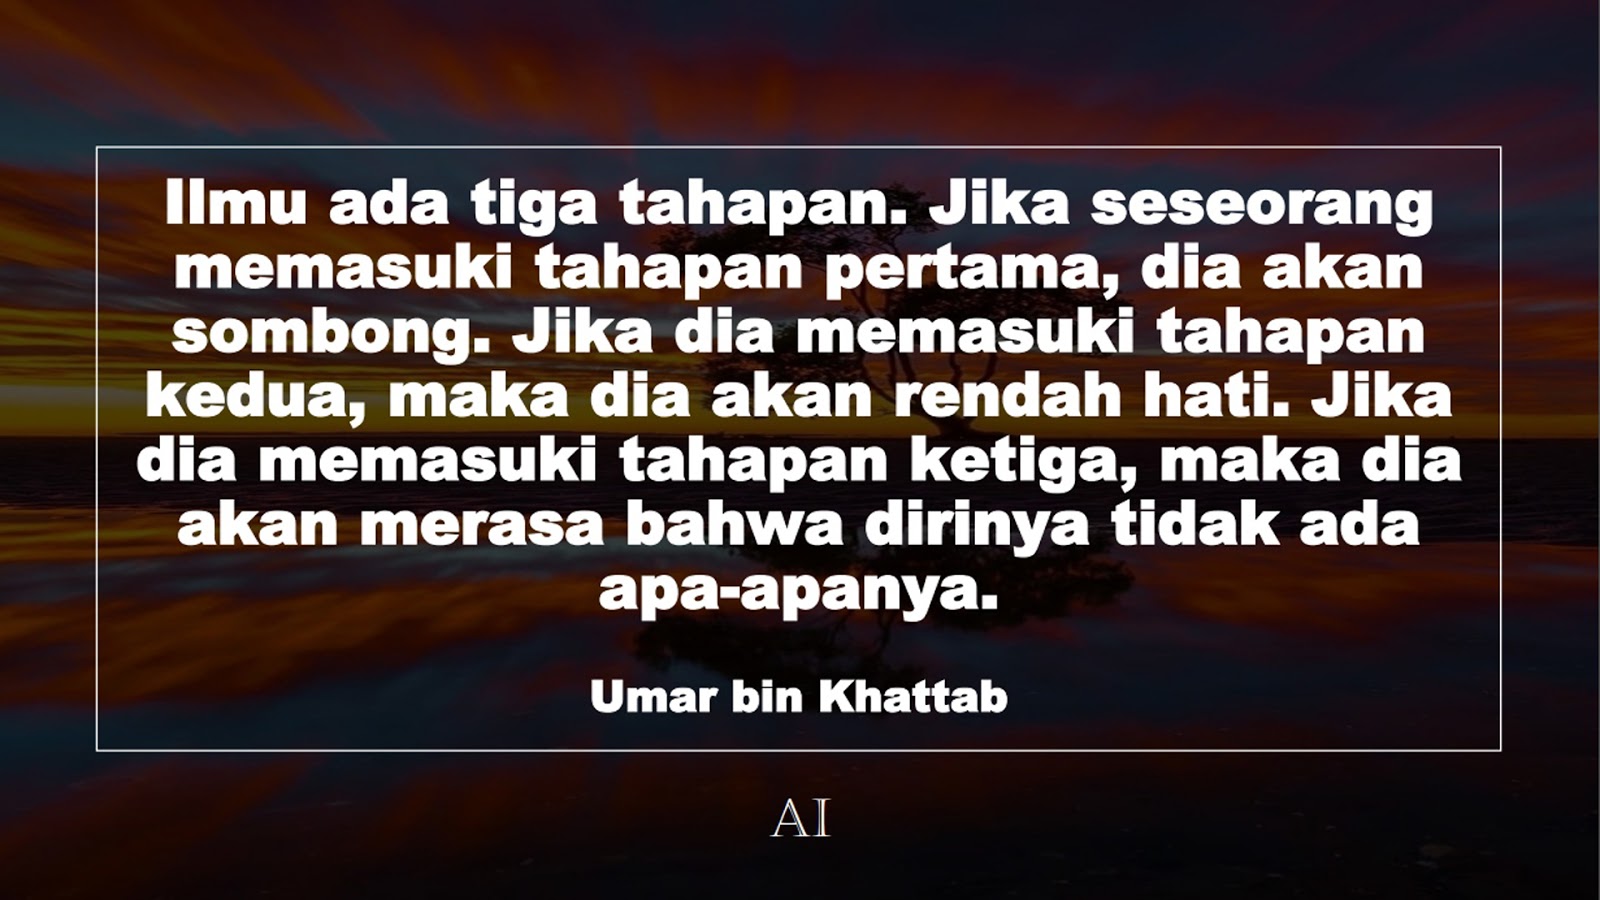 Wallpaper Kata Bijak Umar bin Khattab  (Ilmu ada tiga tahapan. Jika seseorang memasuki tahapan pertama, dia akan sombong. Jika dia memasuki tahapan kedua, maka dia akan rendah hati. Jika dia memasuki tahapan ketiga, maka dia akan merasa bahwa dirinya tidak ada apa-apanya.)